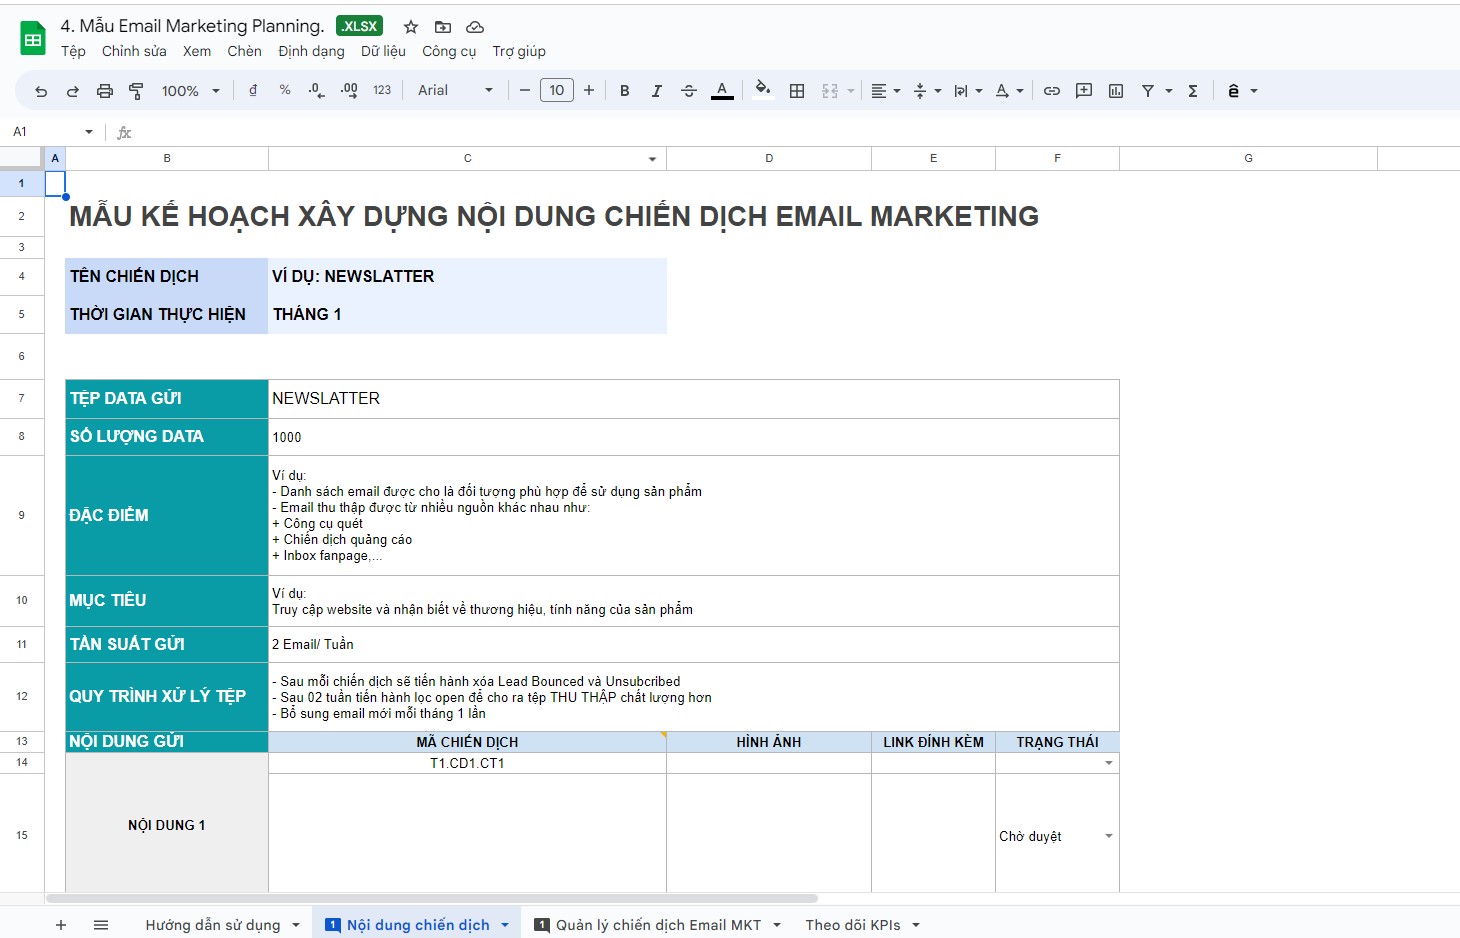 Mẫu kế hoạch Email Marketing